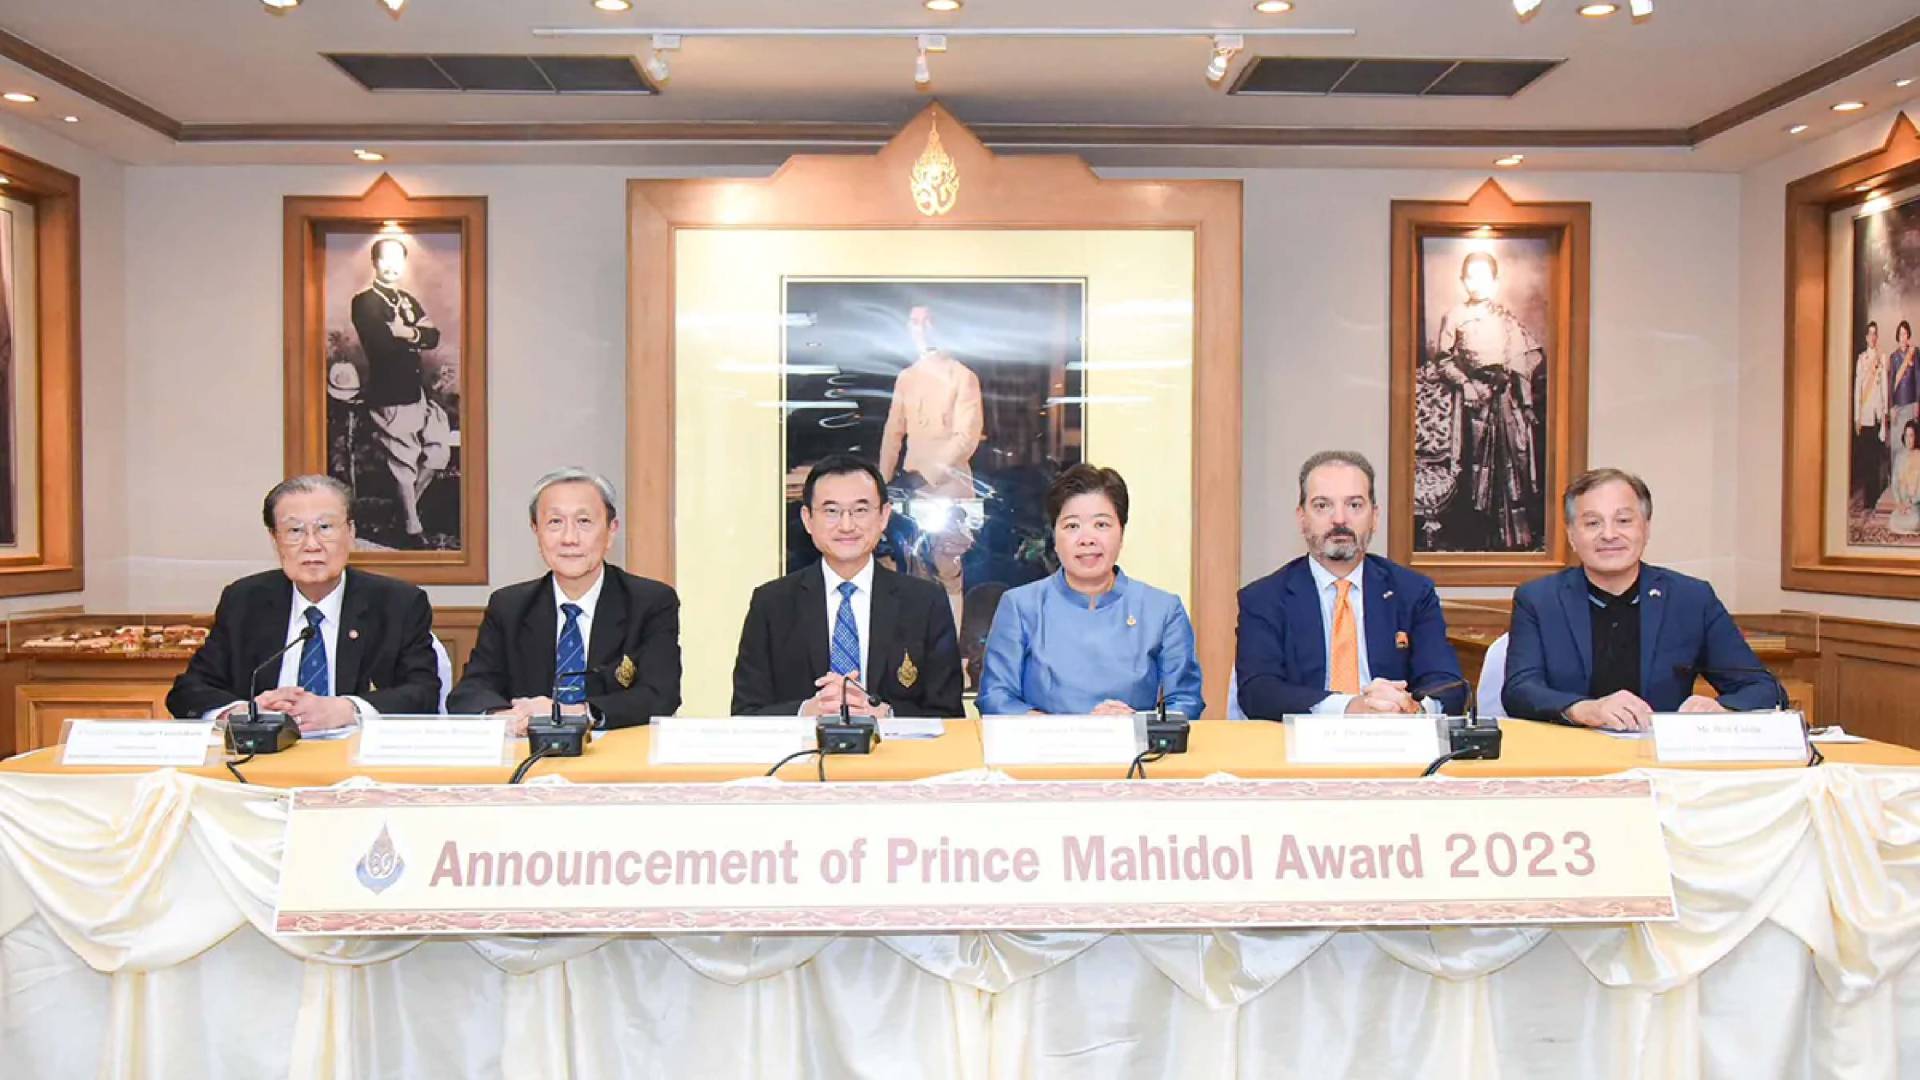 Announcement of the Prince Mahidol Award 2023